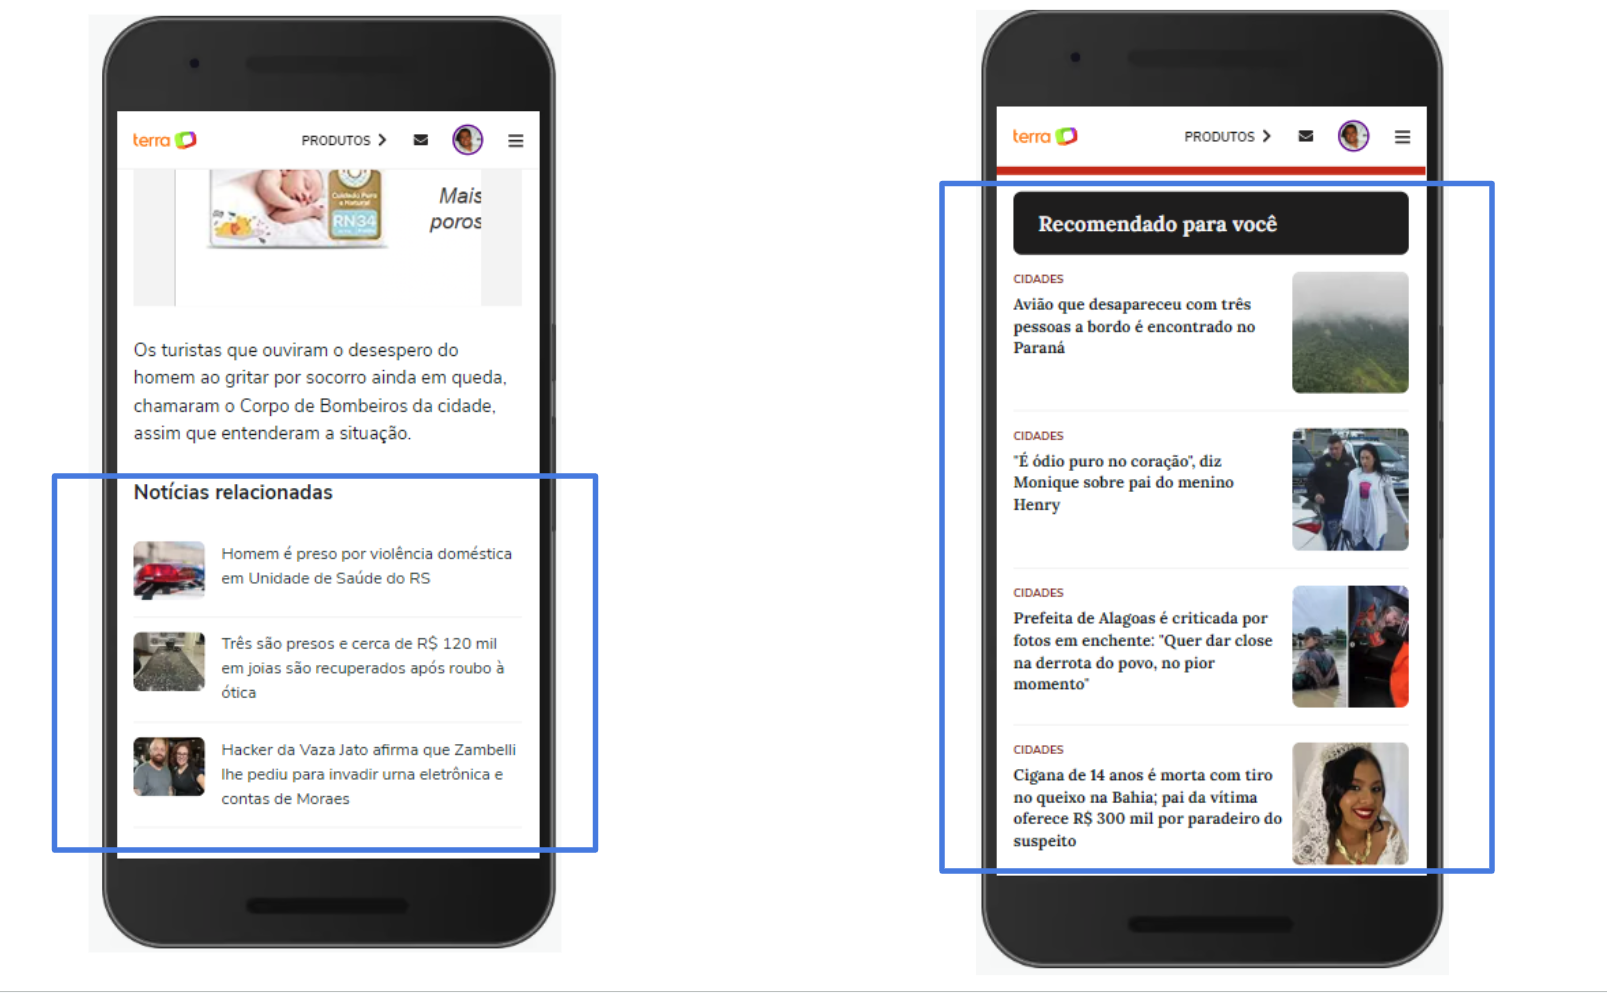 Terra 網站上兩個部分包含預先擷取連結的螢幕截圖。左側是醒目顯示「相關內容」部分，右側則是「為你推薦」部分。